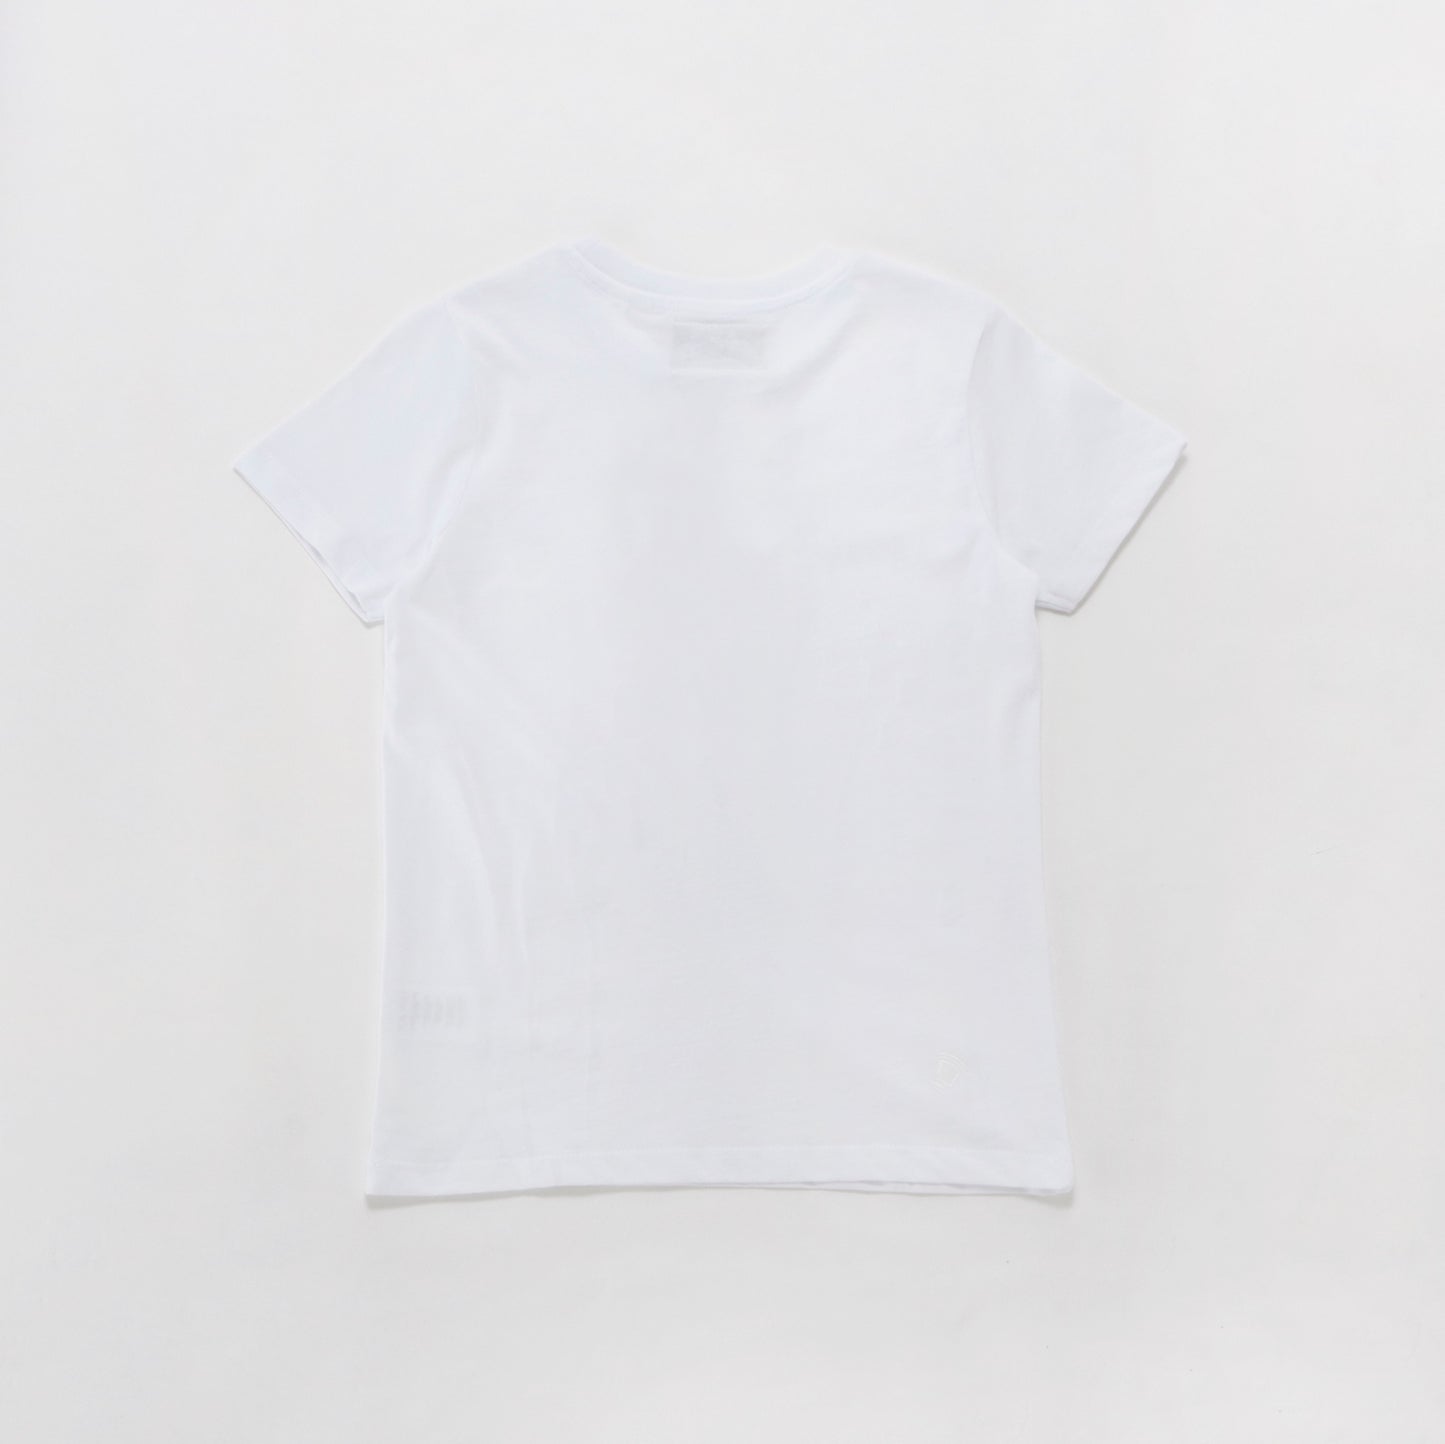 DIVIN CODEENO KIDS Tシャツ - KIDS - ホワイト